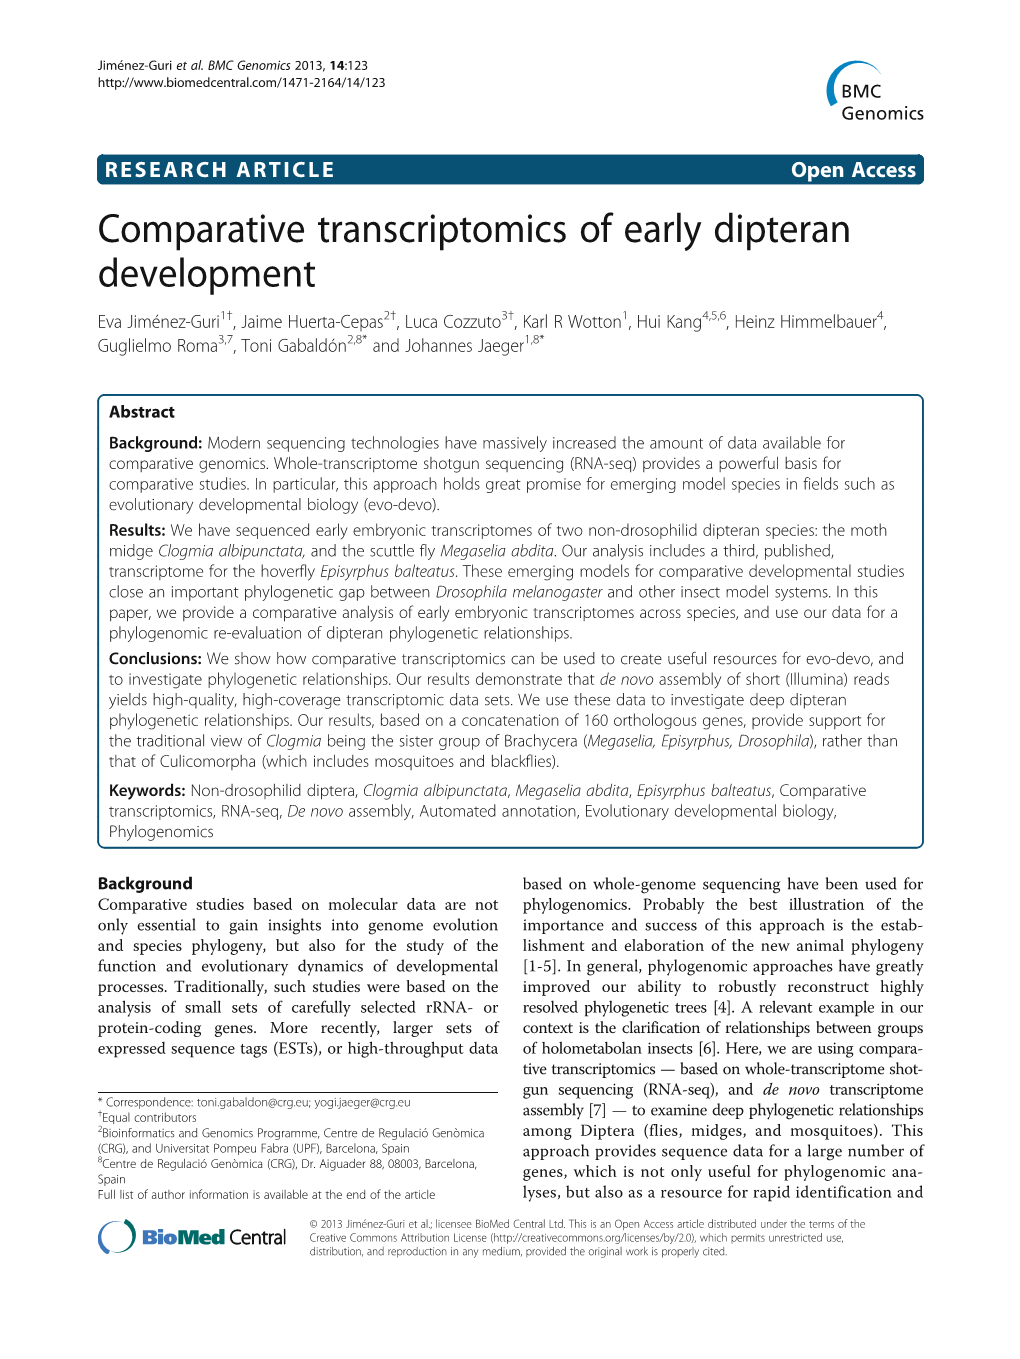 Comparative Transcriptomics of Early Dipteran Development